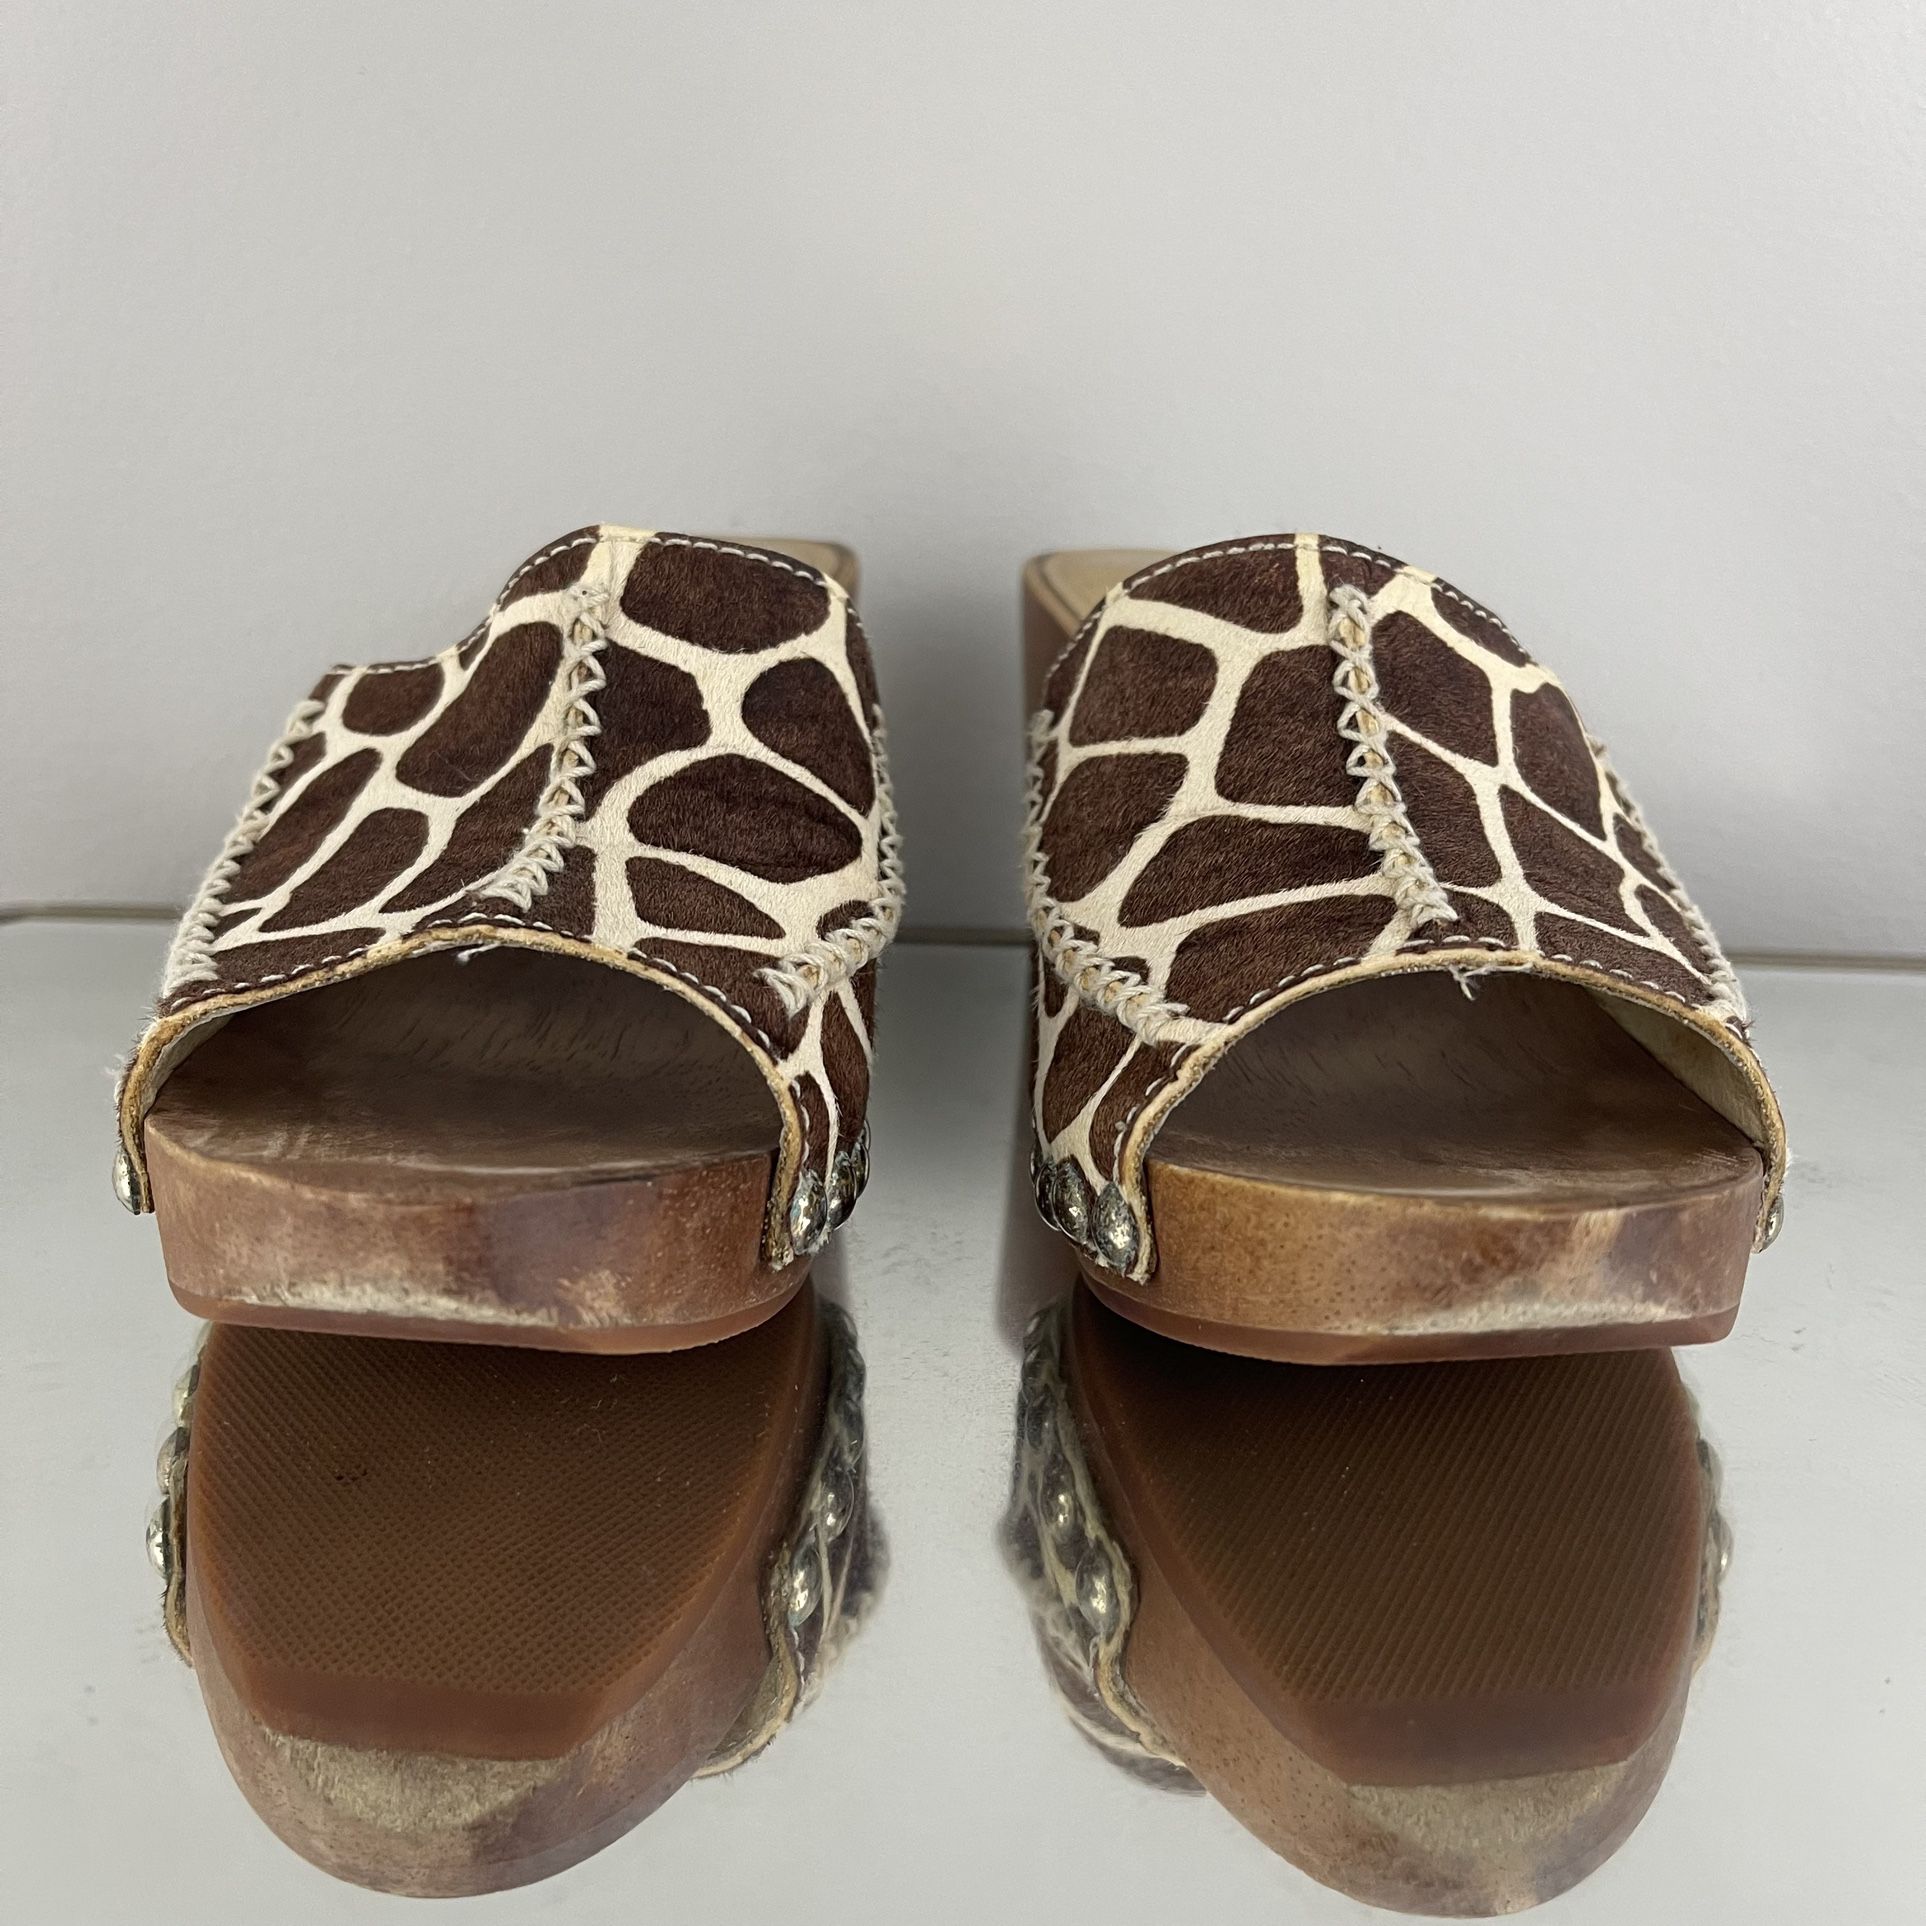 MICHAEL KORS Brown Creme Giraffe Printed Calf Hair Wooden Platform Heel Sandals